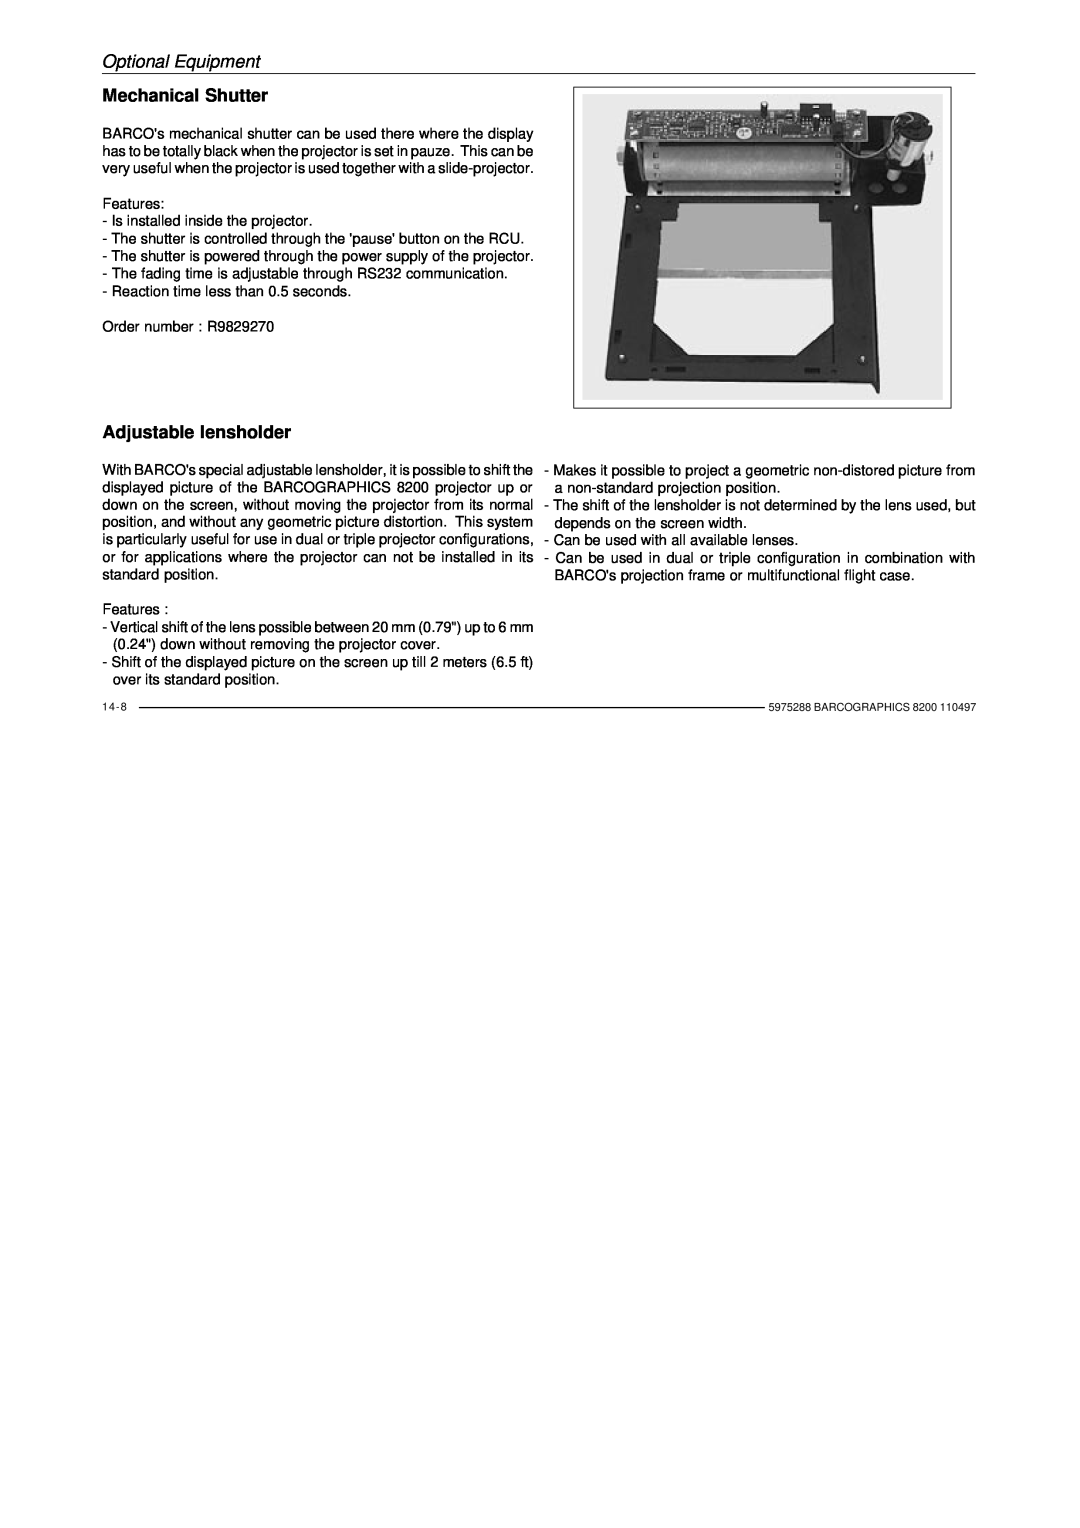 Barco R9001330 owner manual Mechanical Shutter, Adjustable lensholder, Optional Equipment 